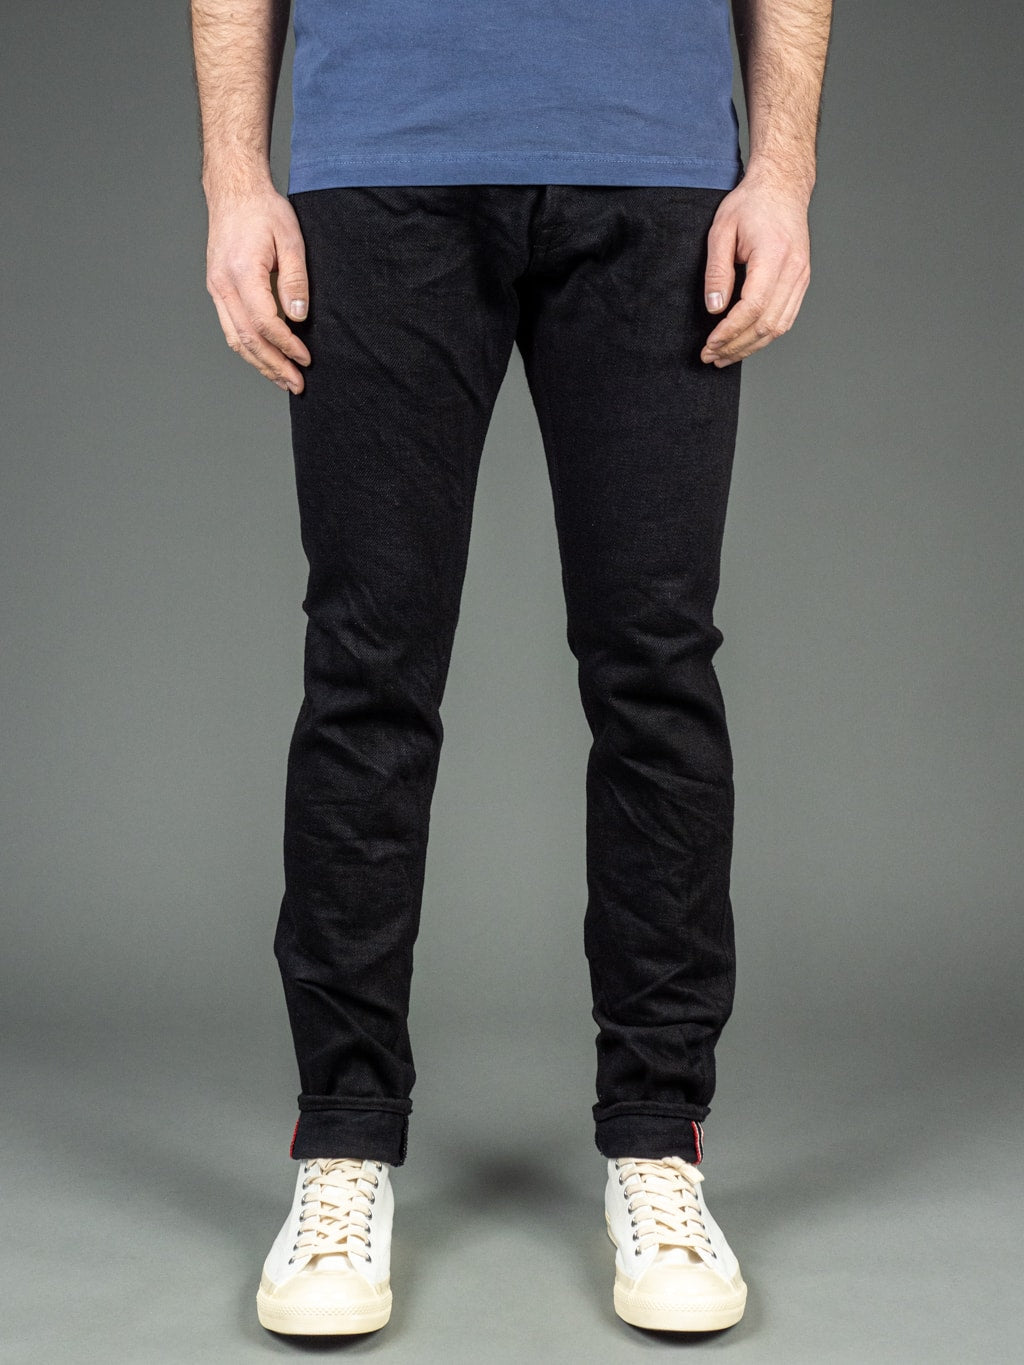 ONI Denim 622ZRIDBK "Secret Denim Indigo x Black" Jeans Front